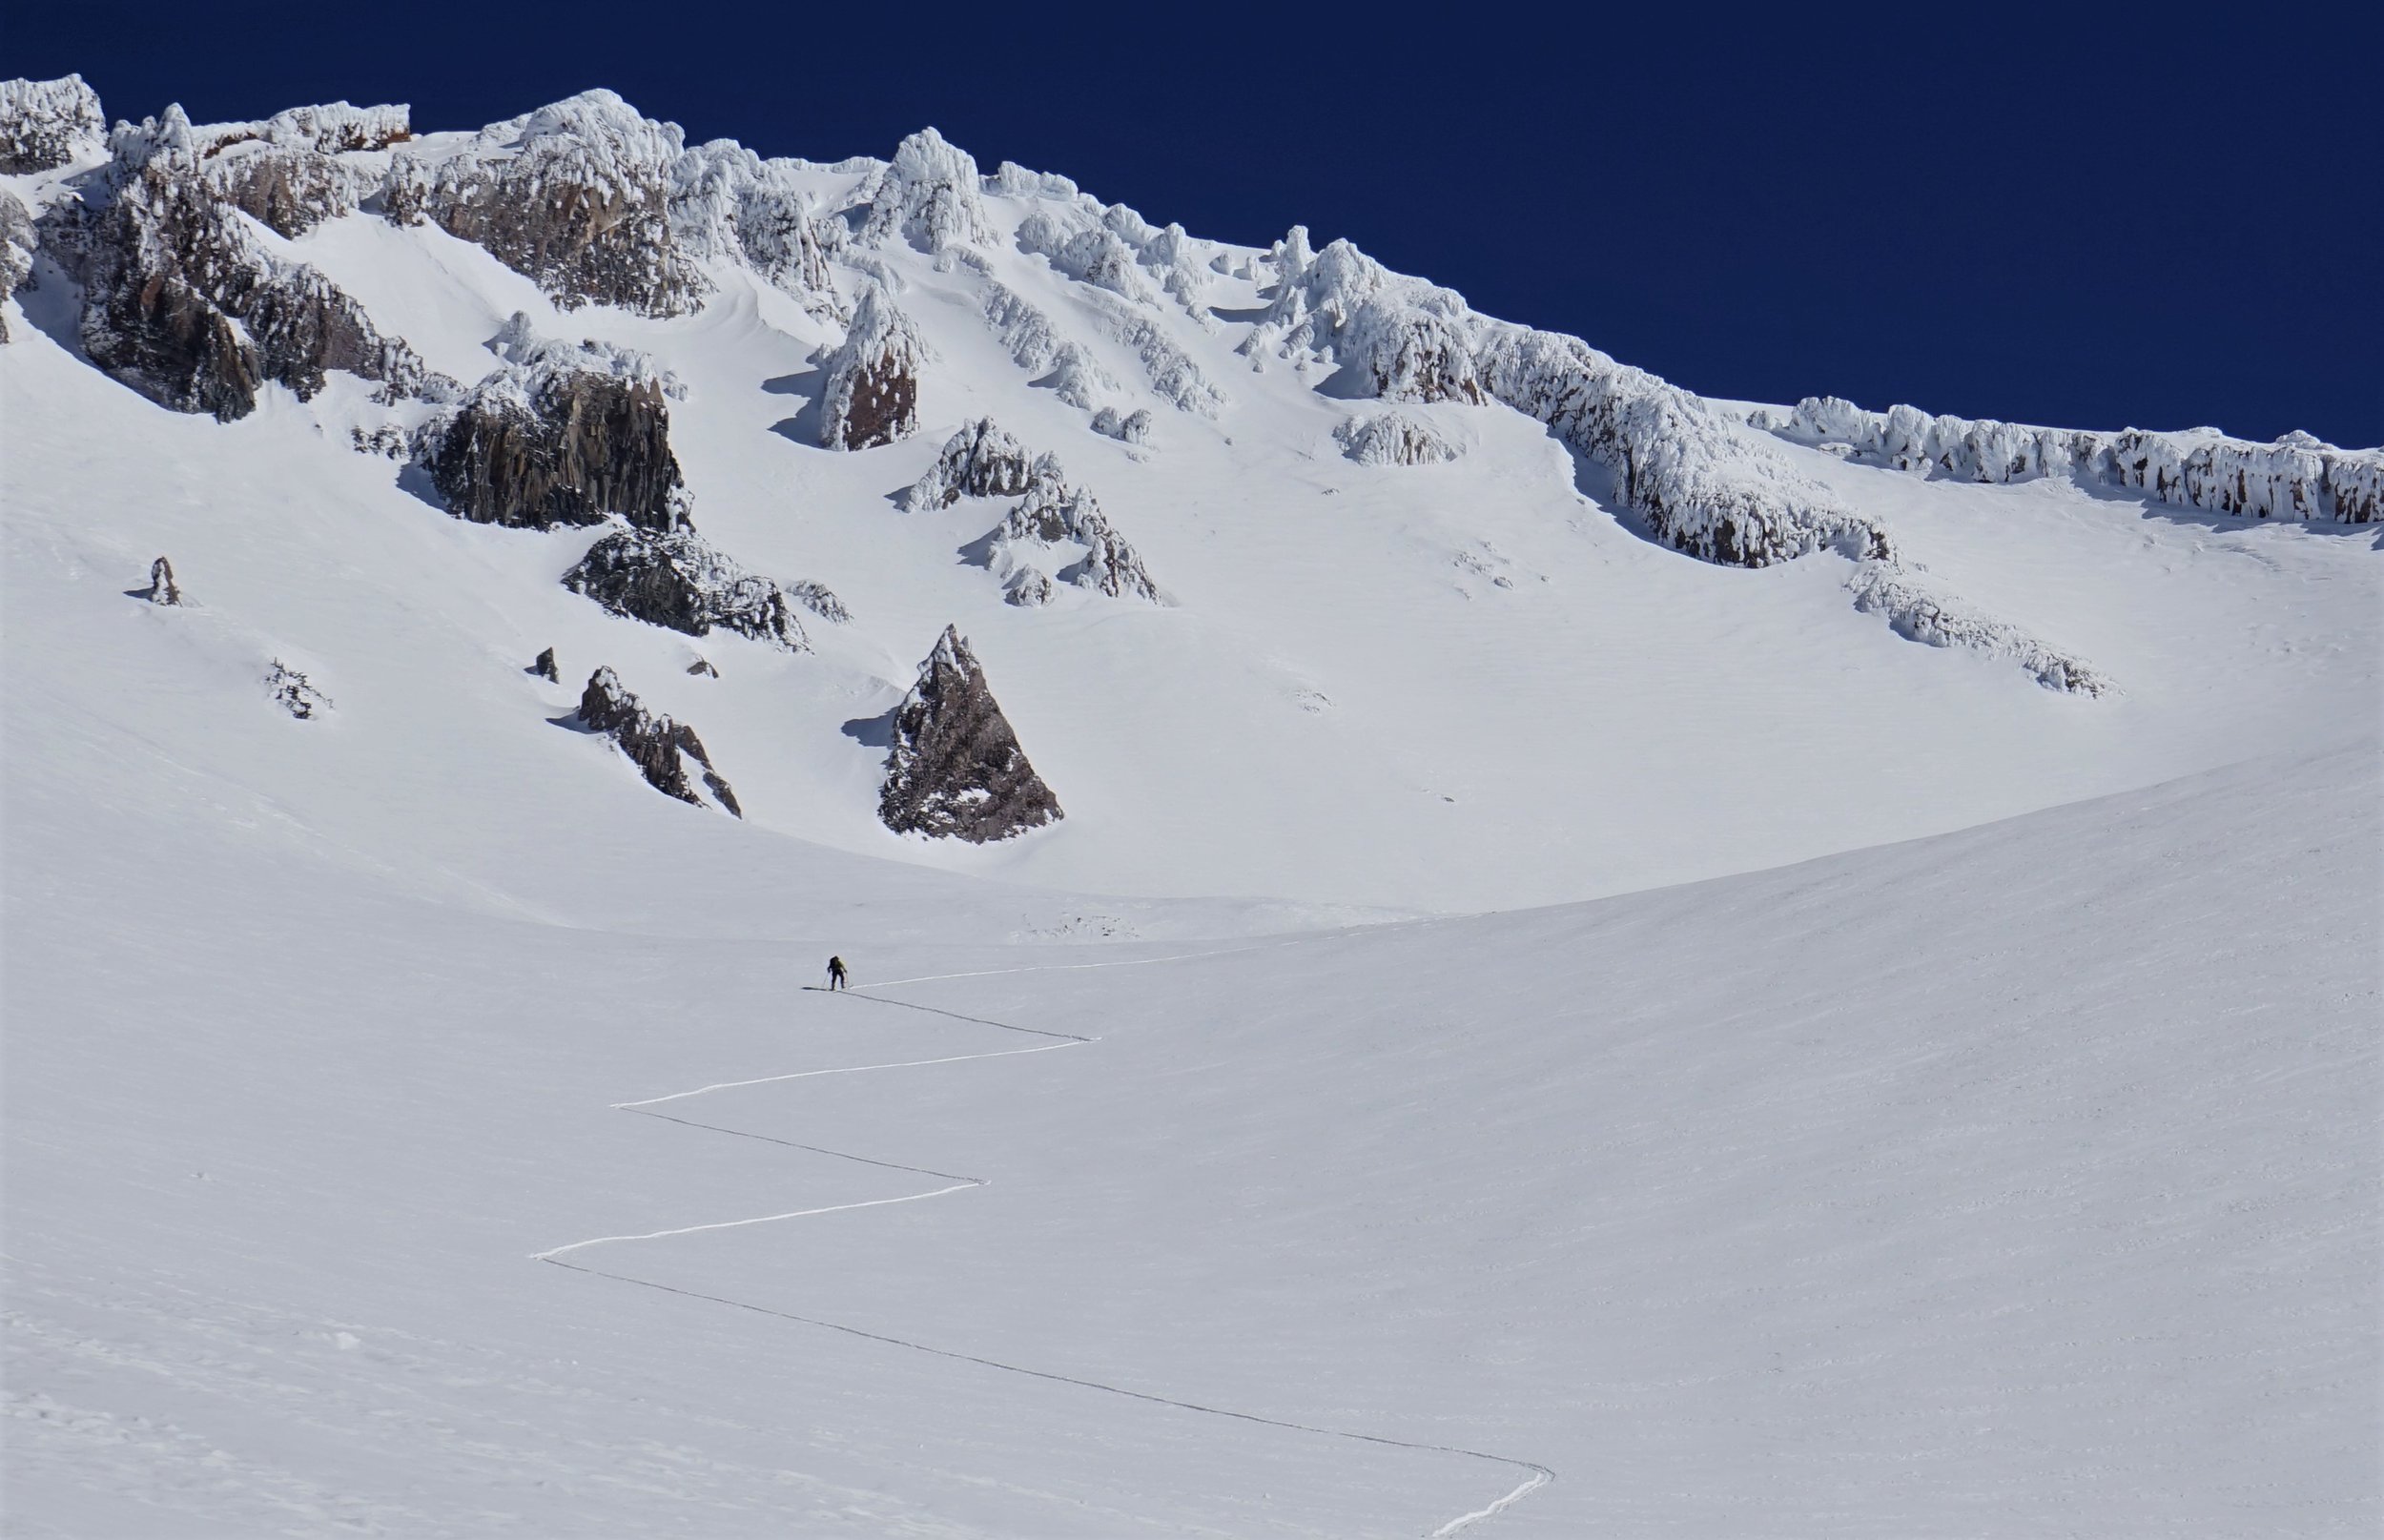 Skier skins up in a methodical zig zag up mt shasta